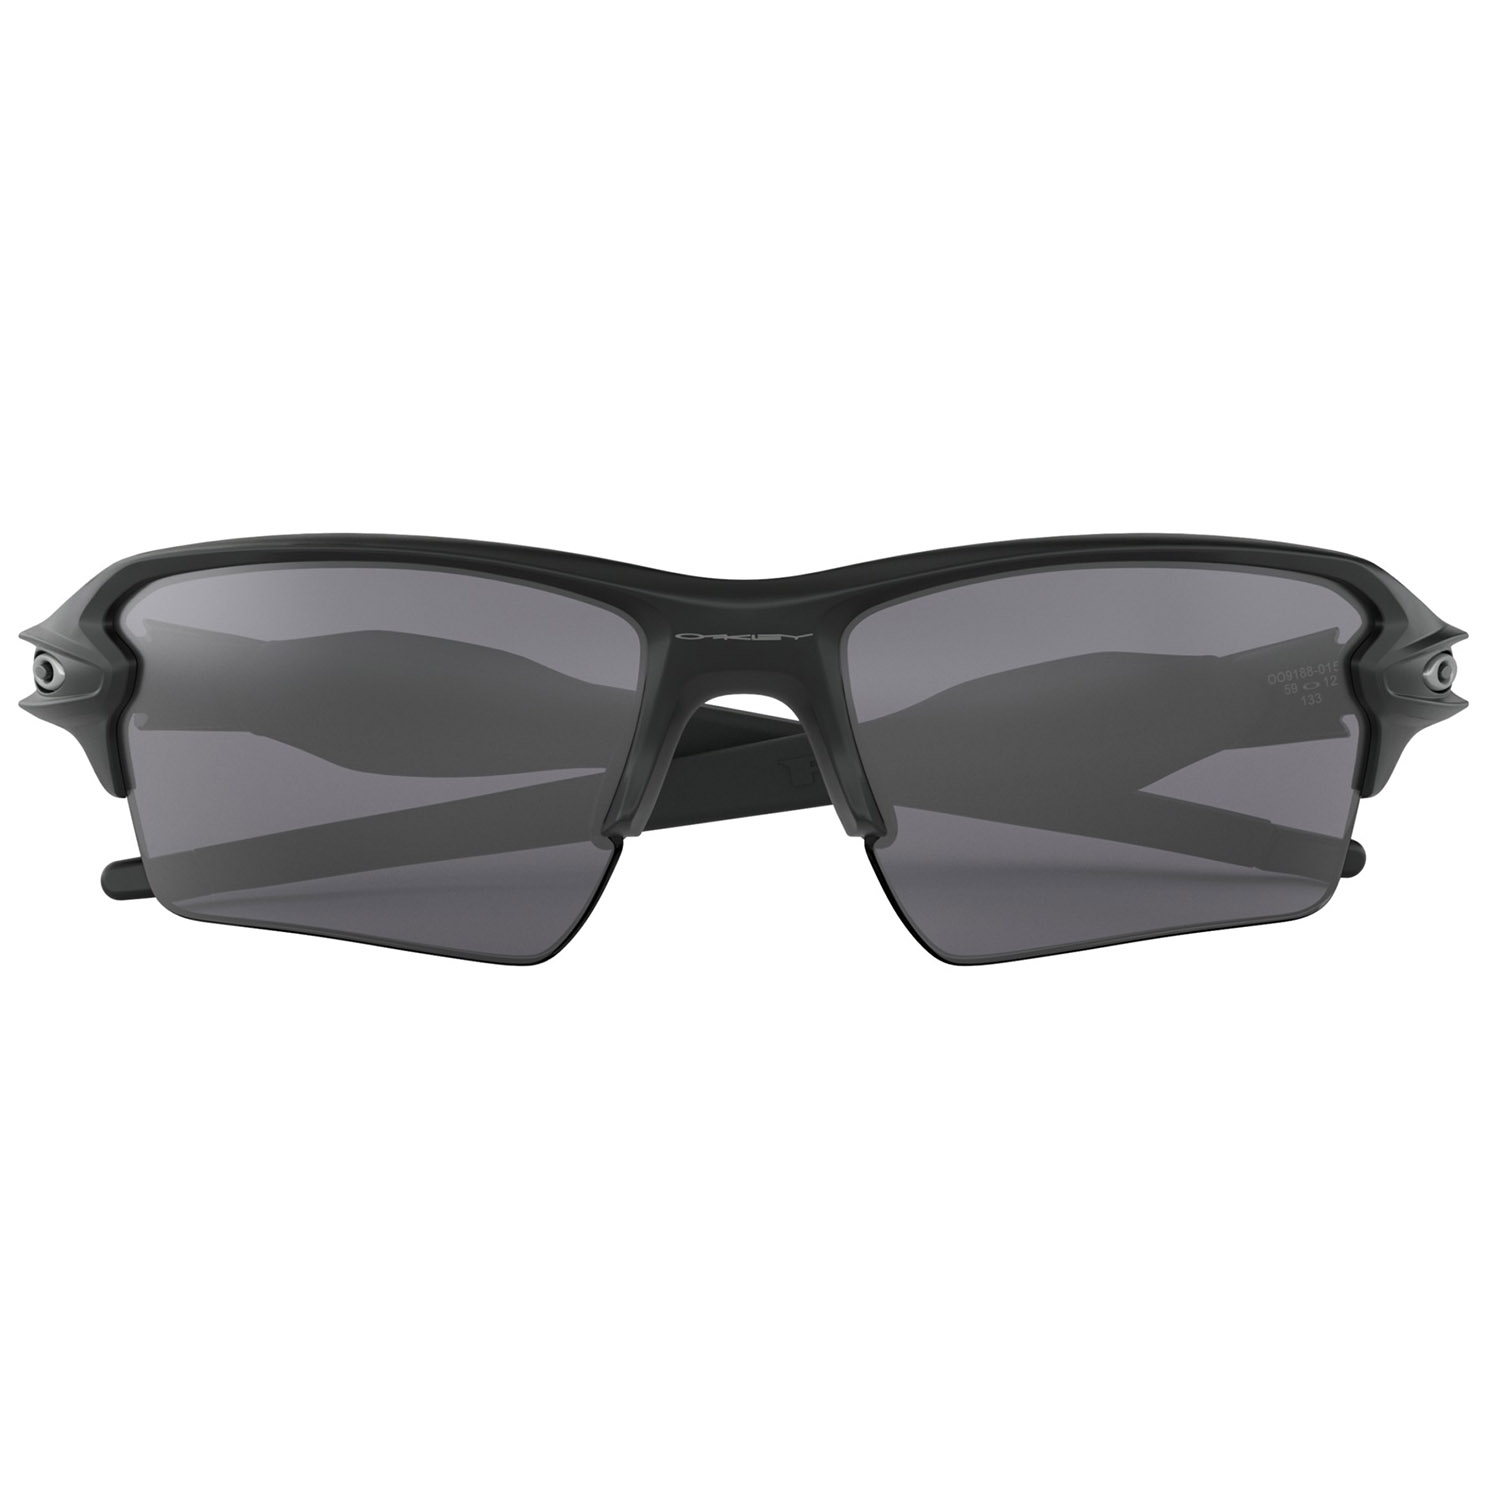 Oakley Flak 2.0 XL Sports Performance Non Polarized Sunglasses, Matte Black - image 5 of 6